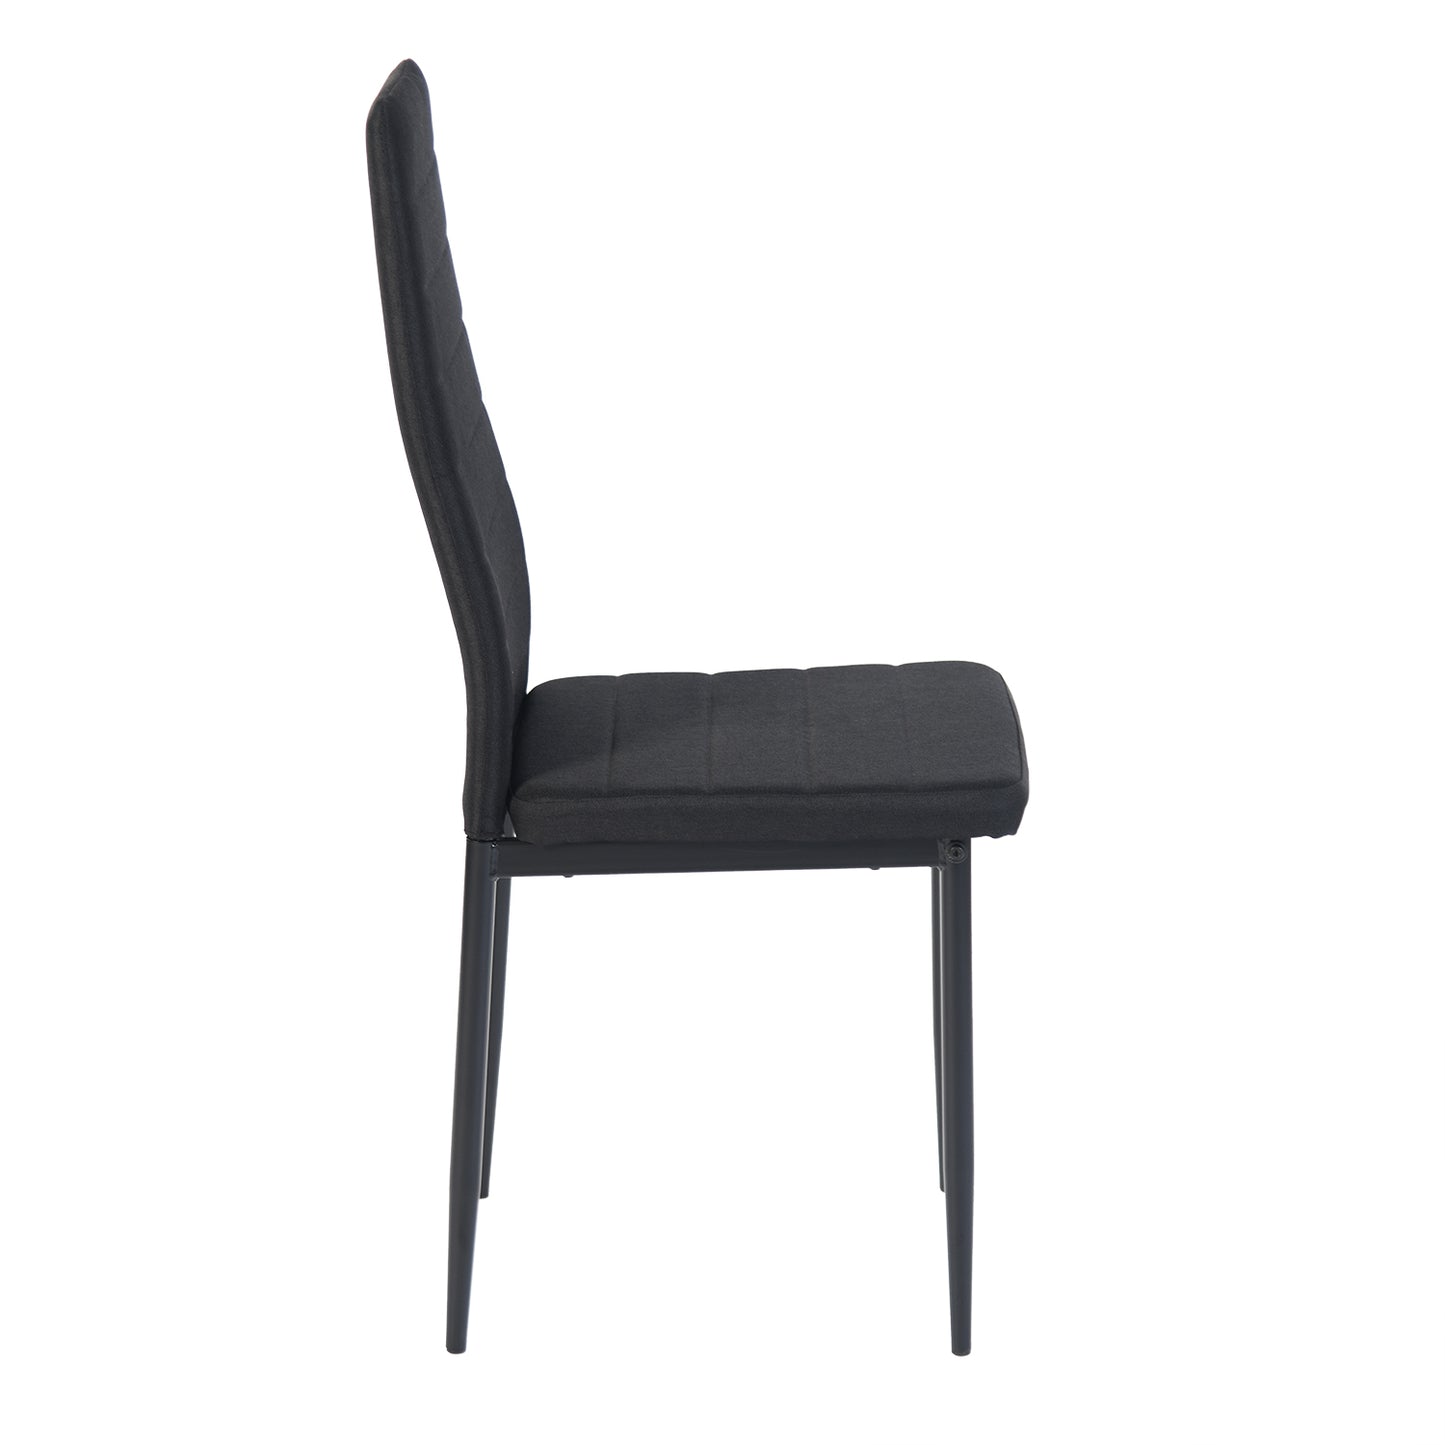 ANN Linen Upholstered Side Chairs (Set of 4) - Black